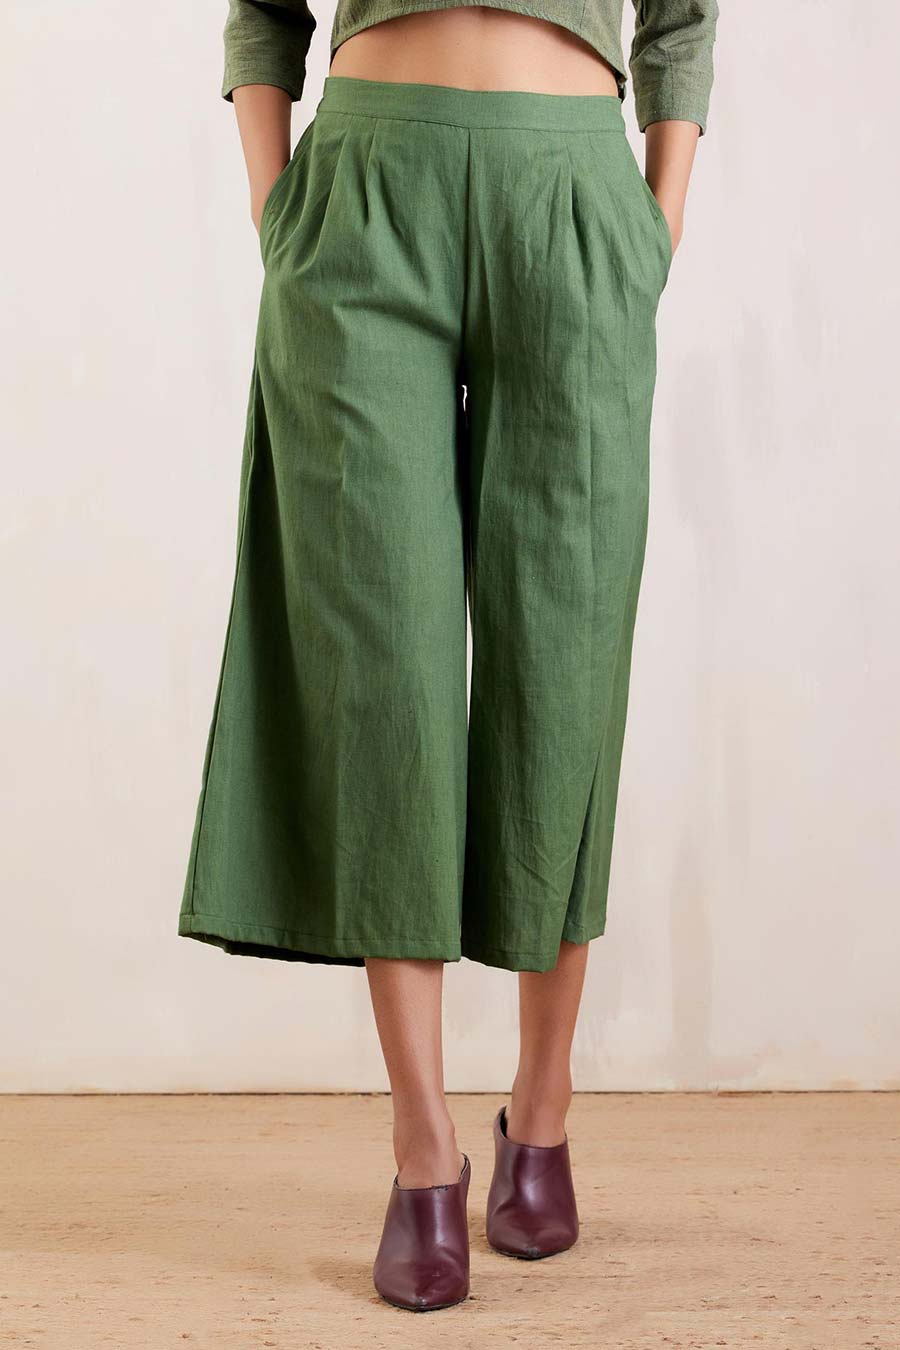 Textured Green Crop Top & Pant Co-Ord Set